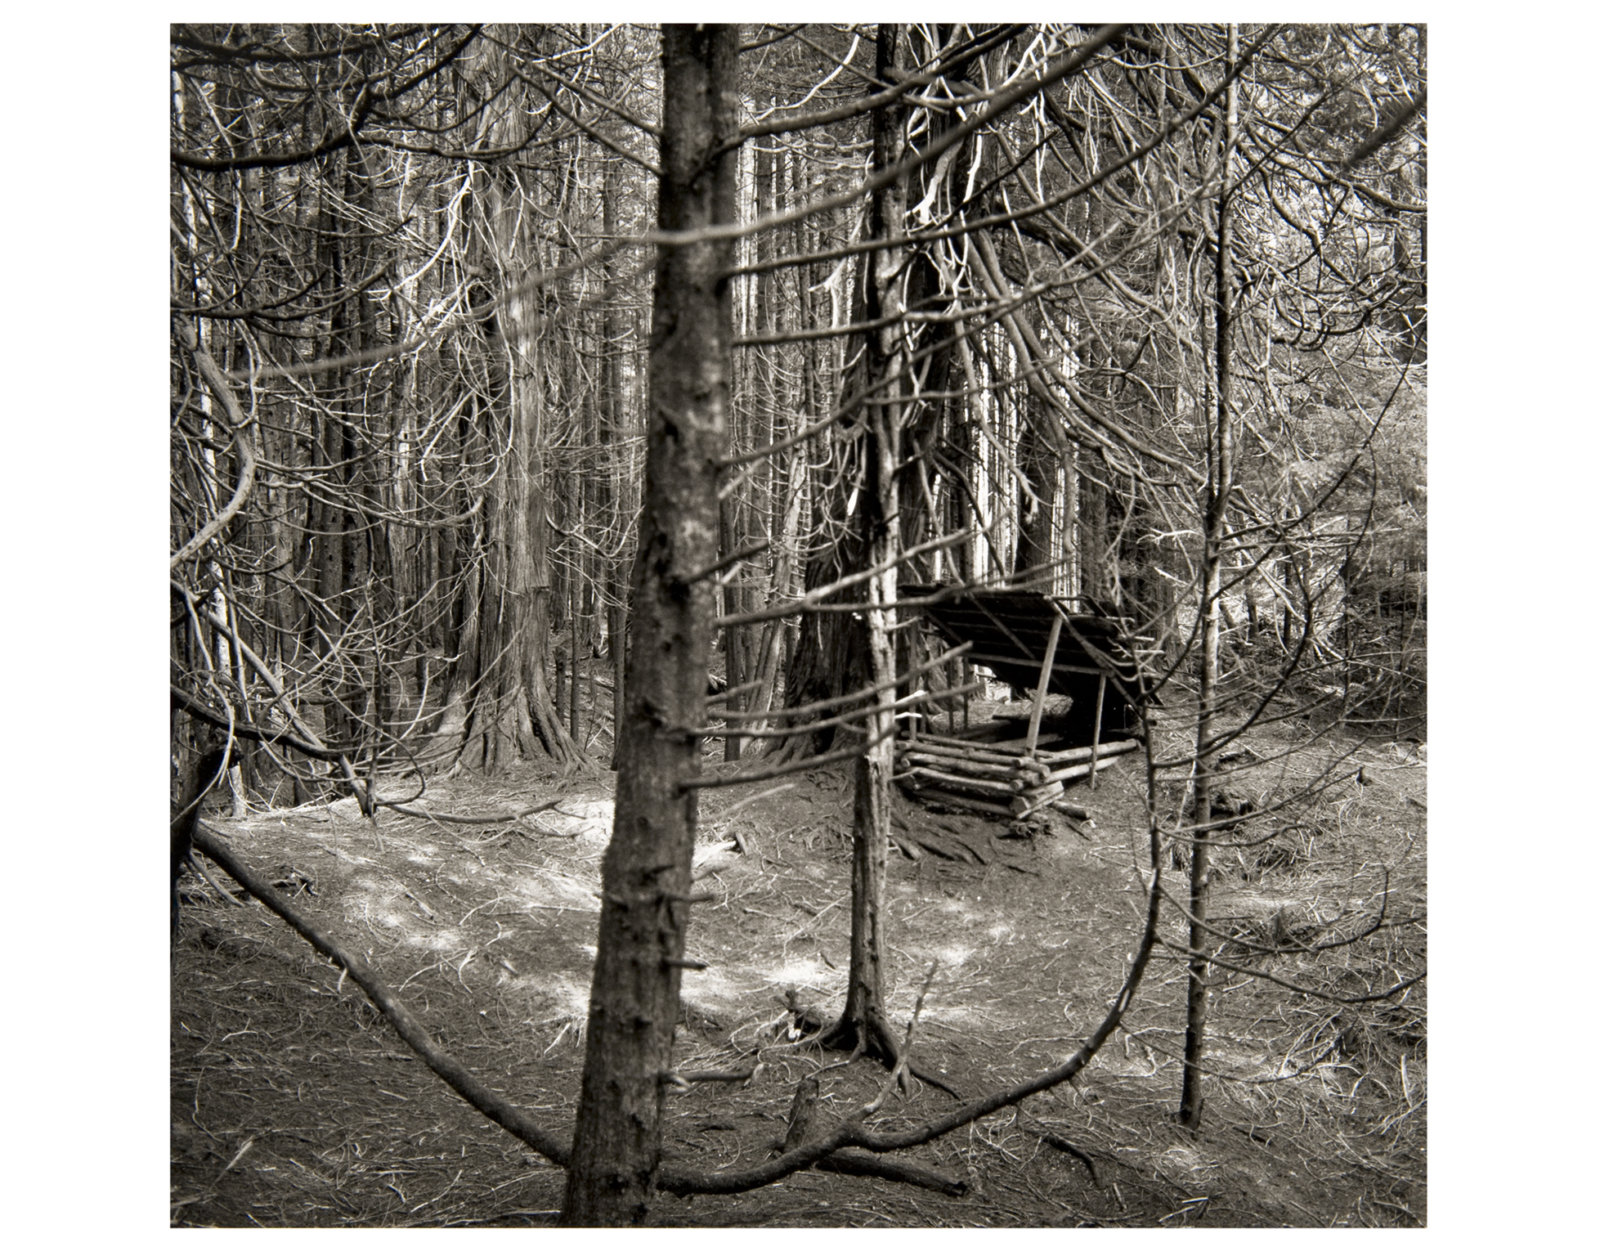 Liz Magor, Deep Woods Portfolio, 1999, 8 toned silver prints, 5: 11 x 14 in. (28 x 35 cm), 3: 8 x 10 in. (13 x 17 cm)